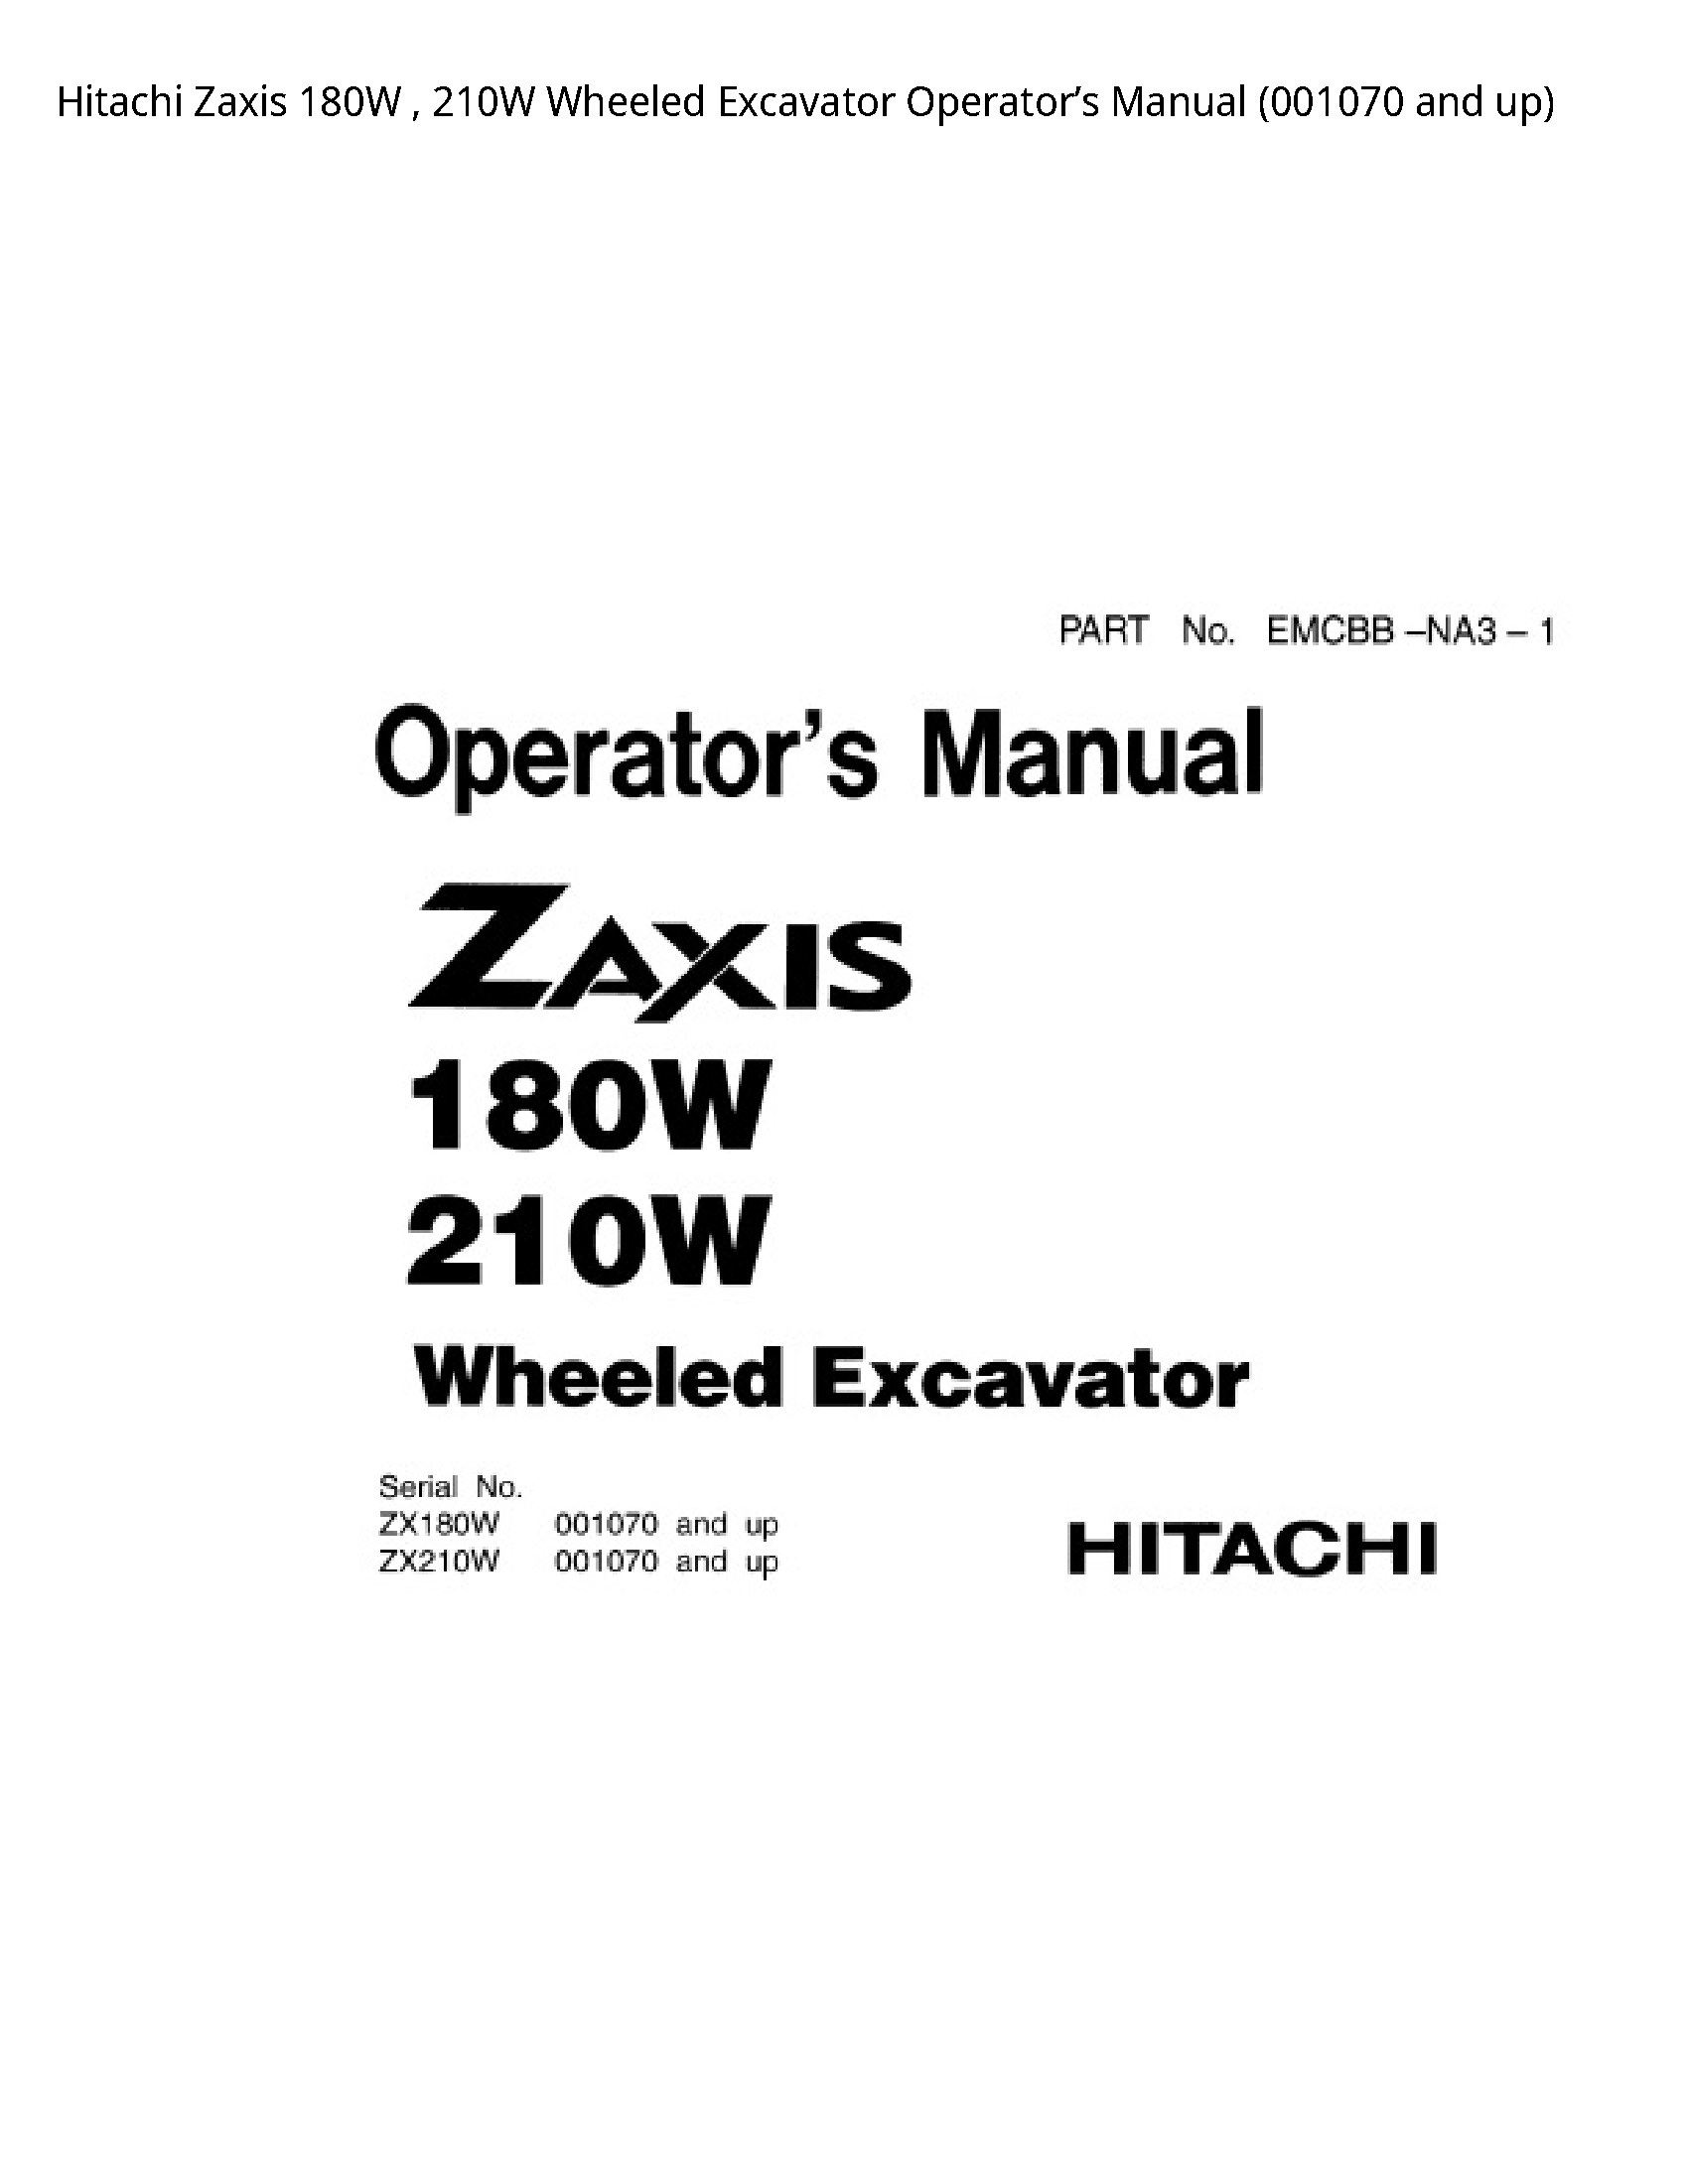 Hitachi 180W Zaxis Wheeled Excavator Operator’s manual